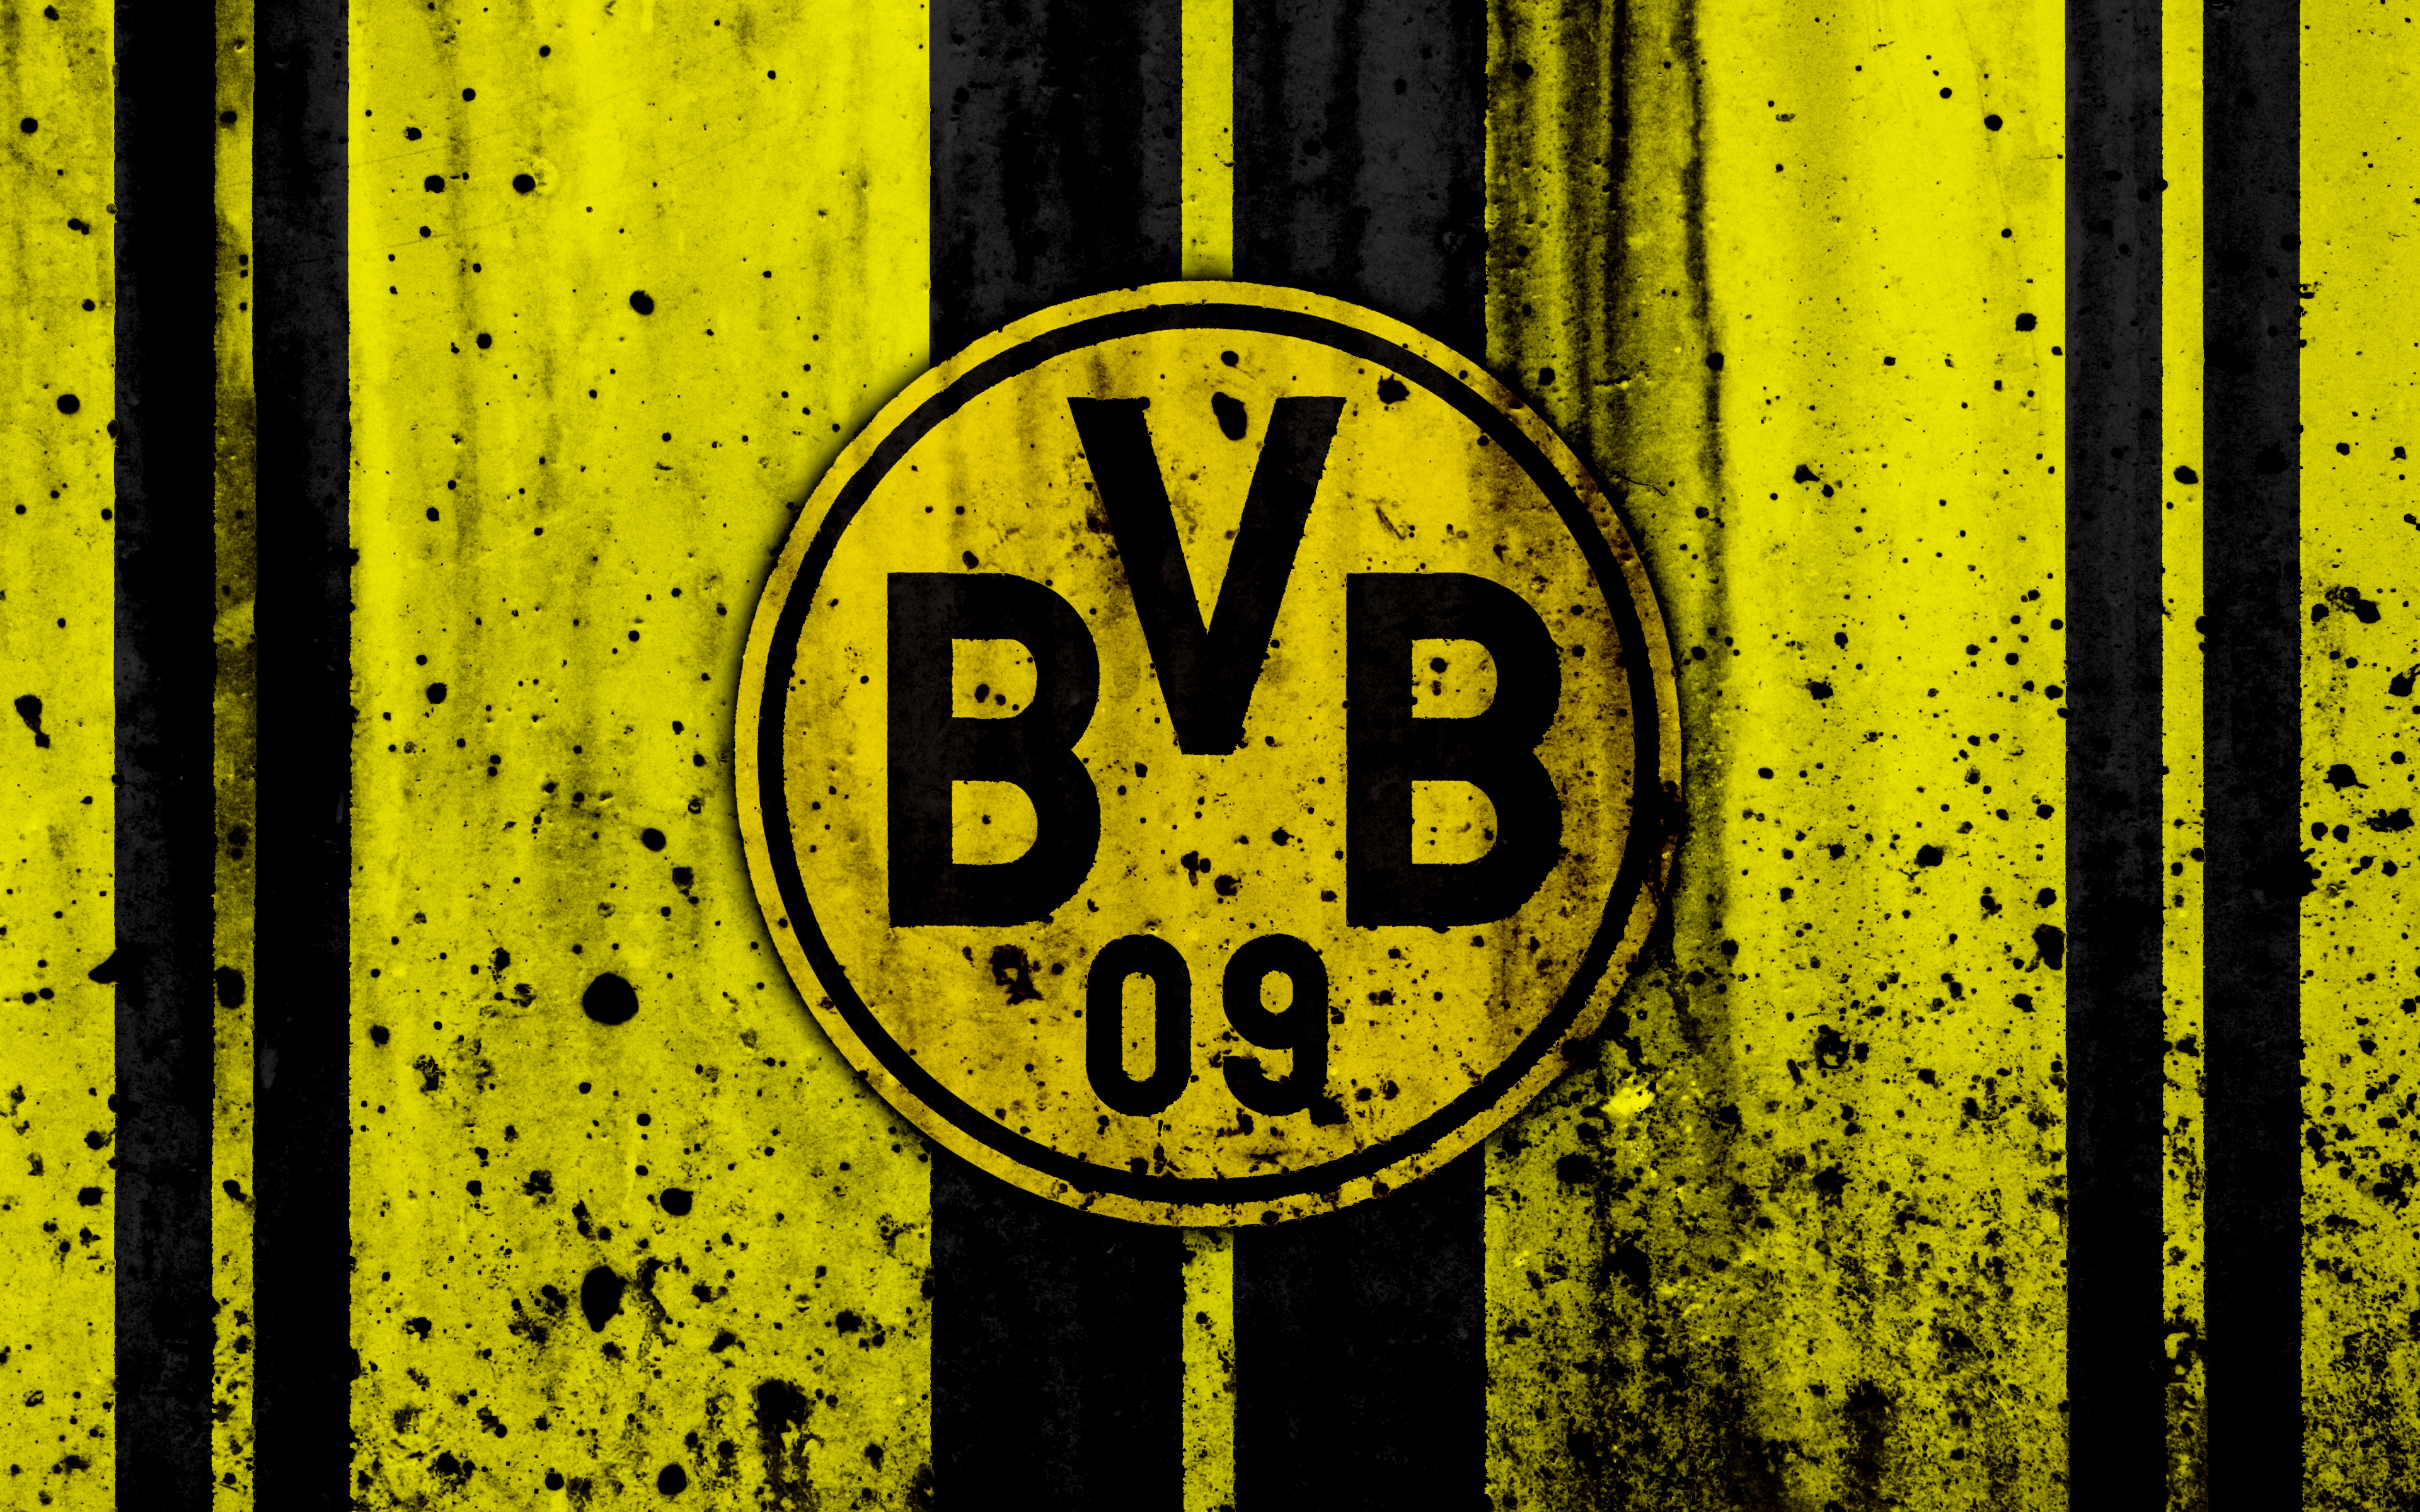 Bvb Borussia Dortmund Emblem Logo Soccer 3840x2400